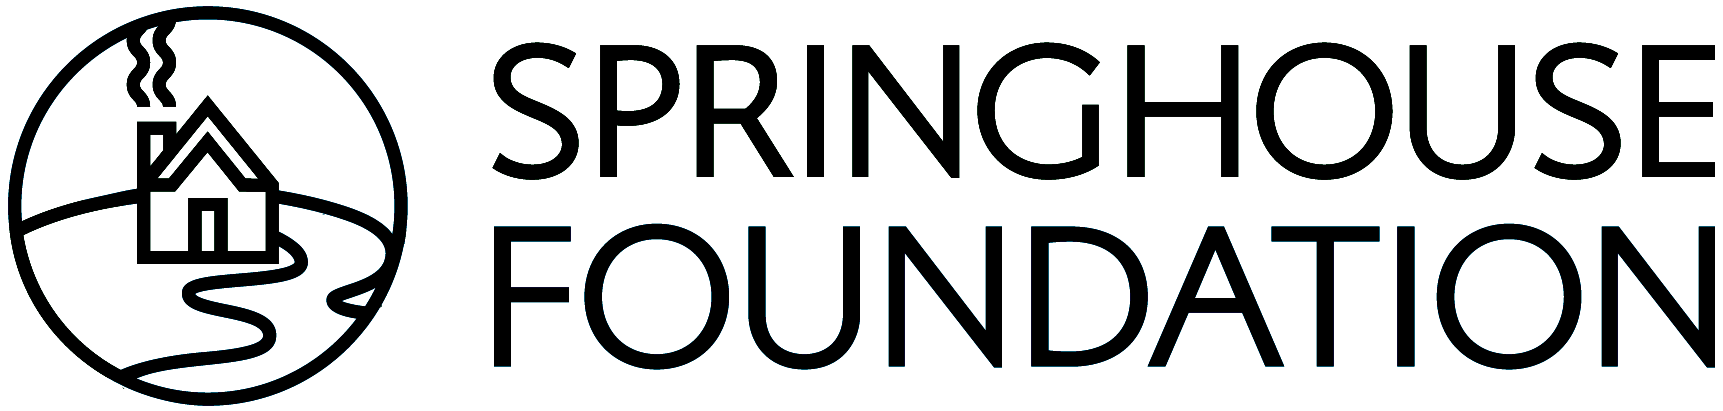 Springhouse Foundation